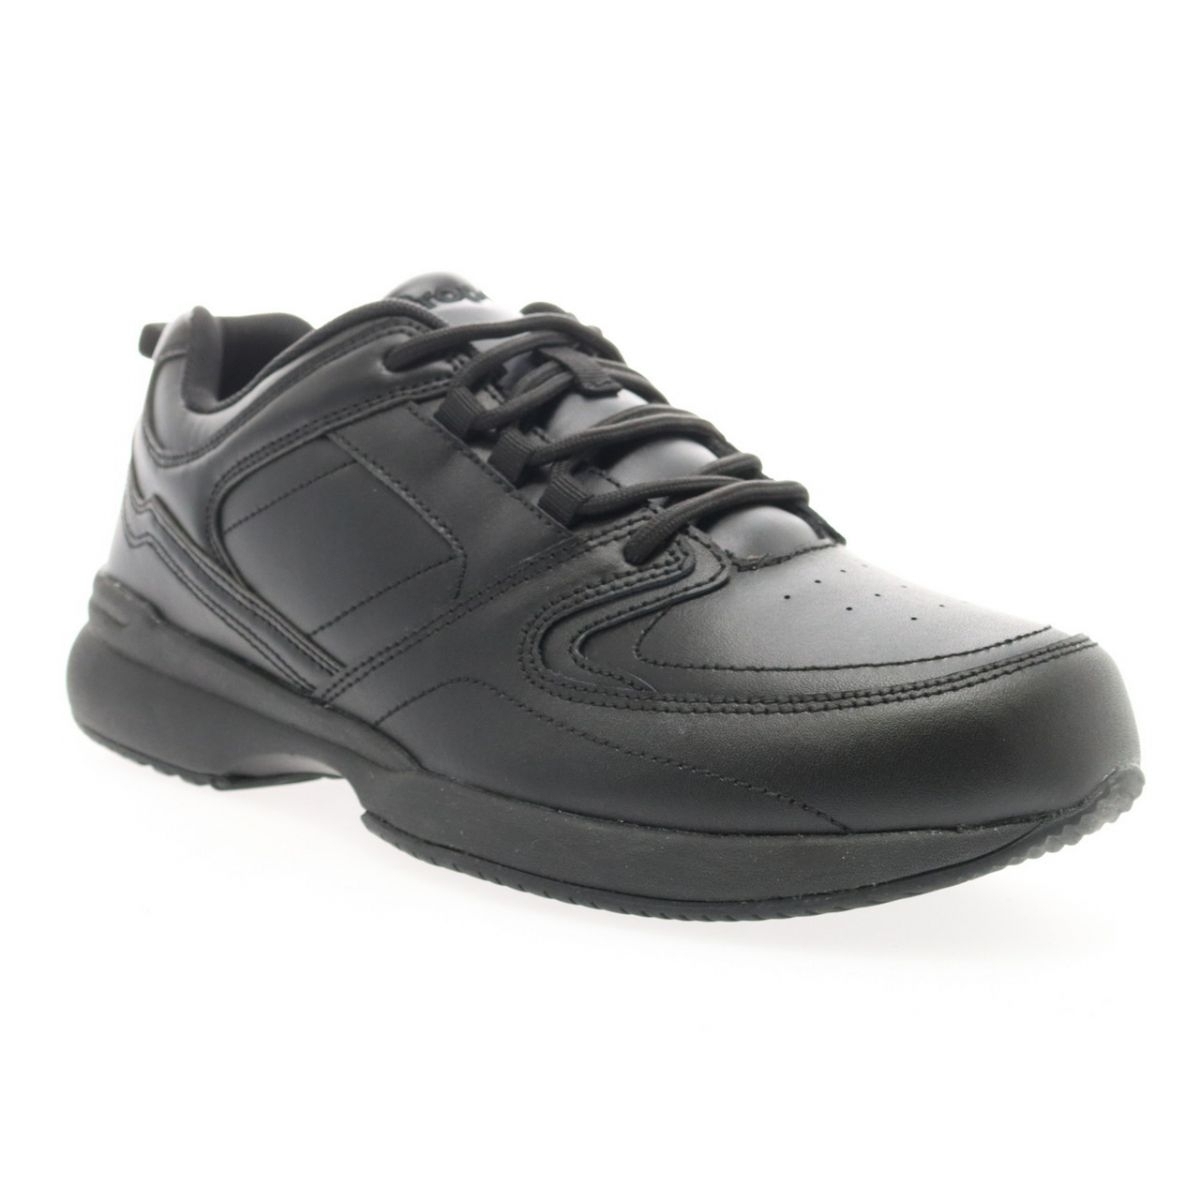 Propet Men's Life Walker Sport Sneaker Black - MAA272LBLK BLACK - BLACK, 7 Wide